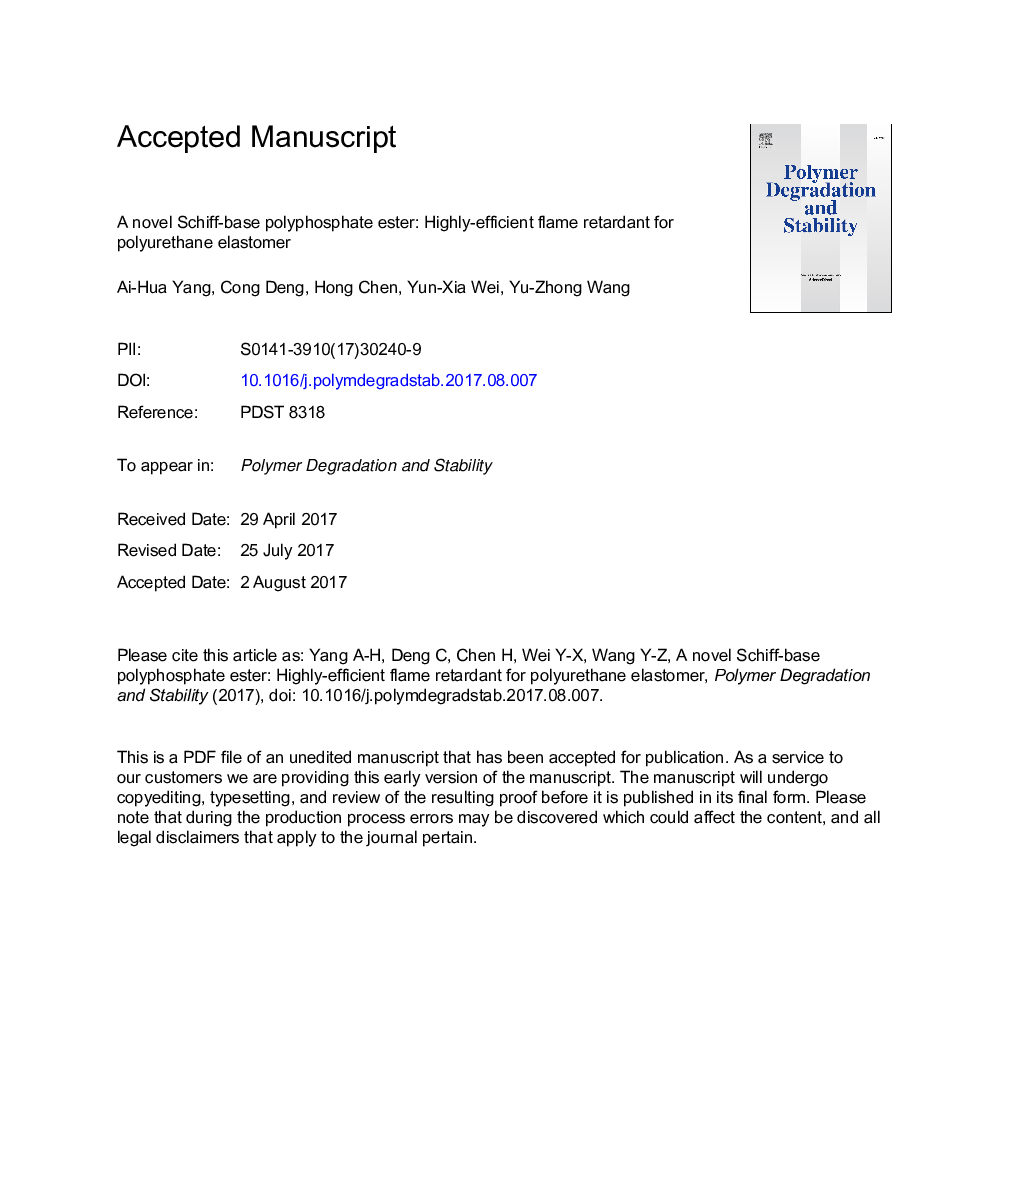 A novel Schiff-base polyphosphate ester: Highly-efficient flame retardant for polyurethane elastomer